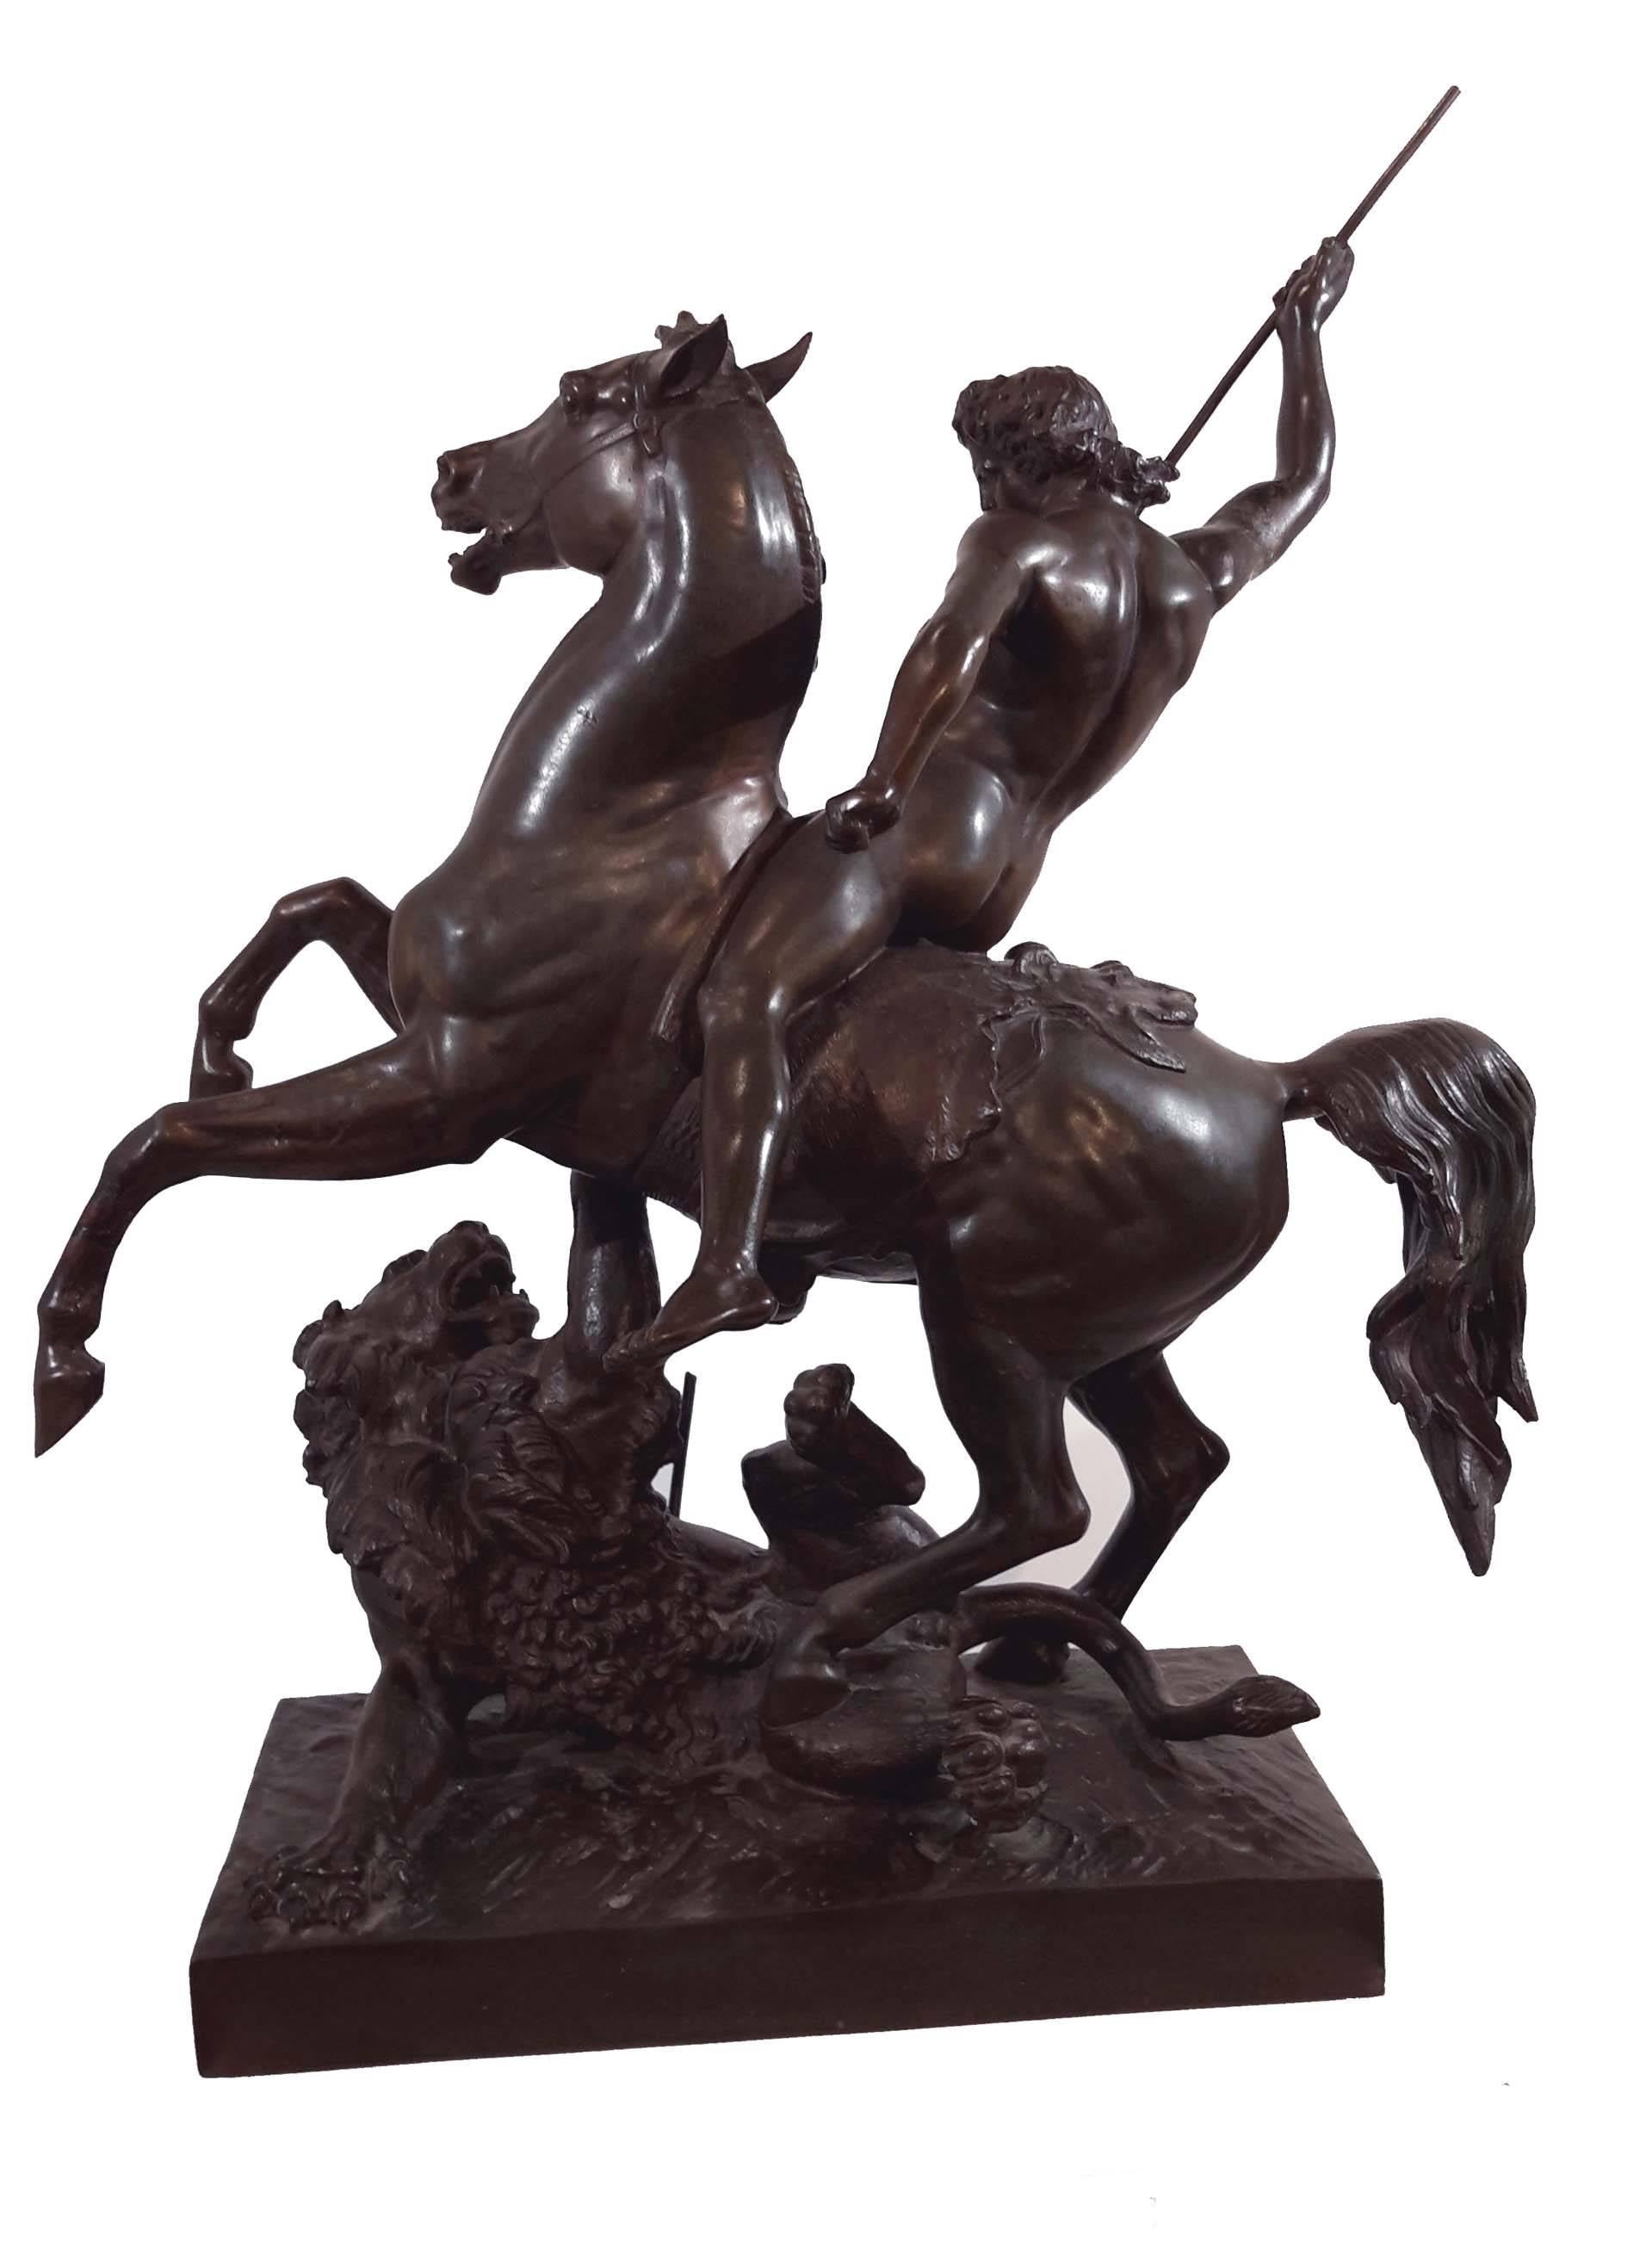 Wonderful details of Roman figure on horseback killing a lion.